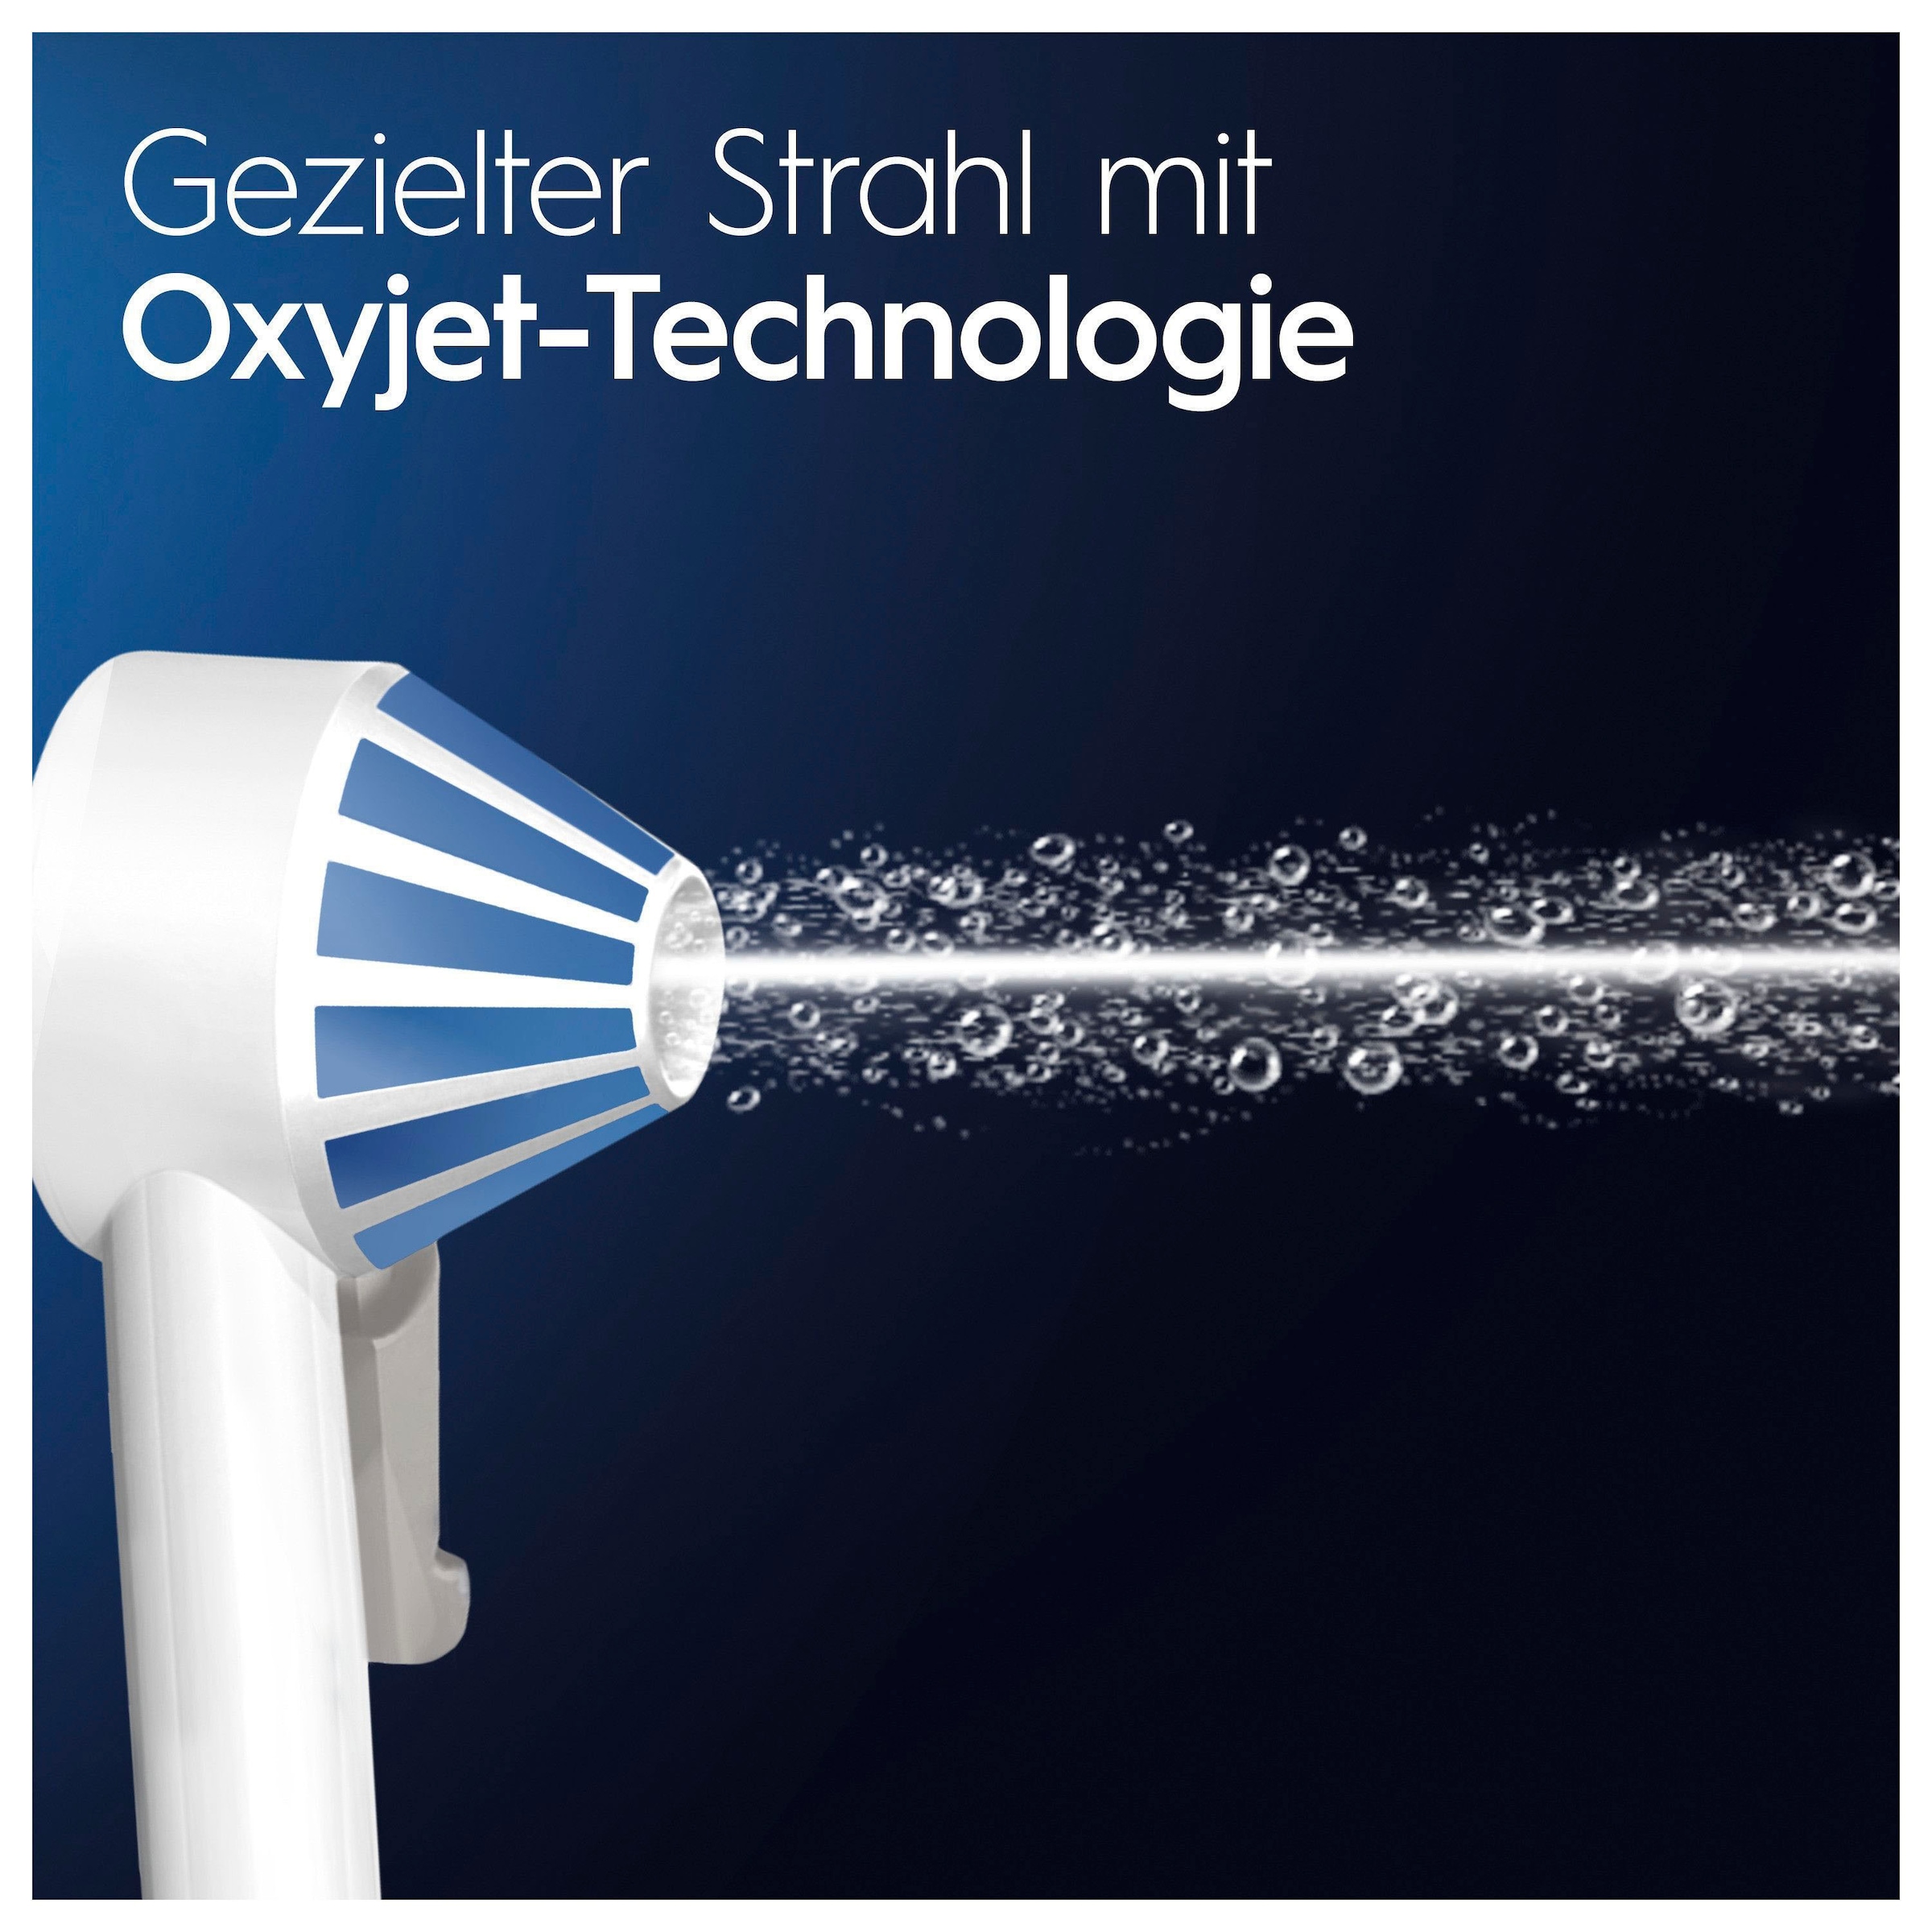 Oral-B Munddusche »AquaCare 4«, 2 St. Aufsätze}, Kabellose mit Oxyjet-Technologie